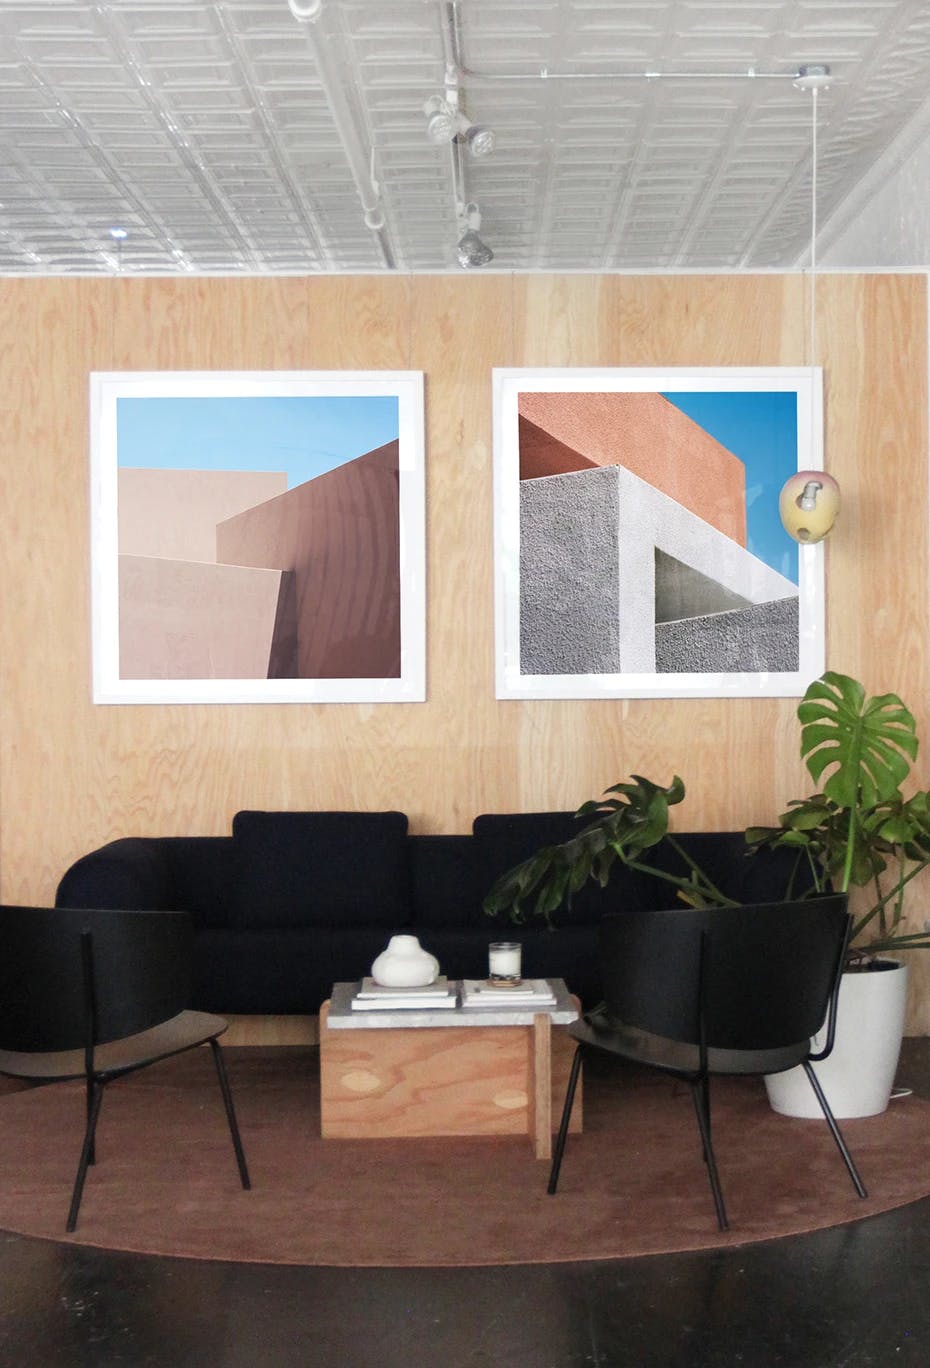 Exhibition: Fabricating Desert: Gallery